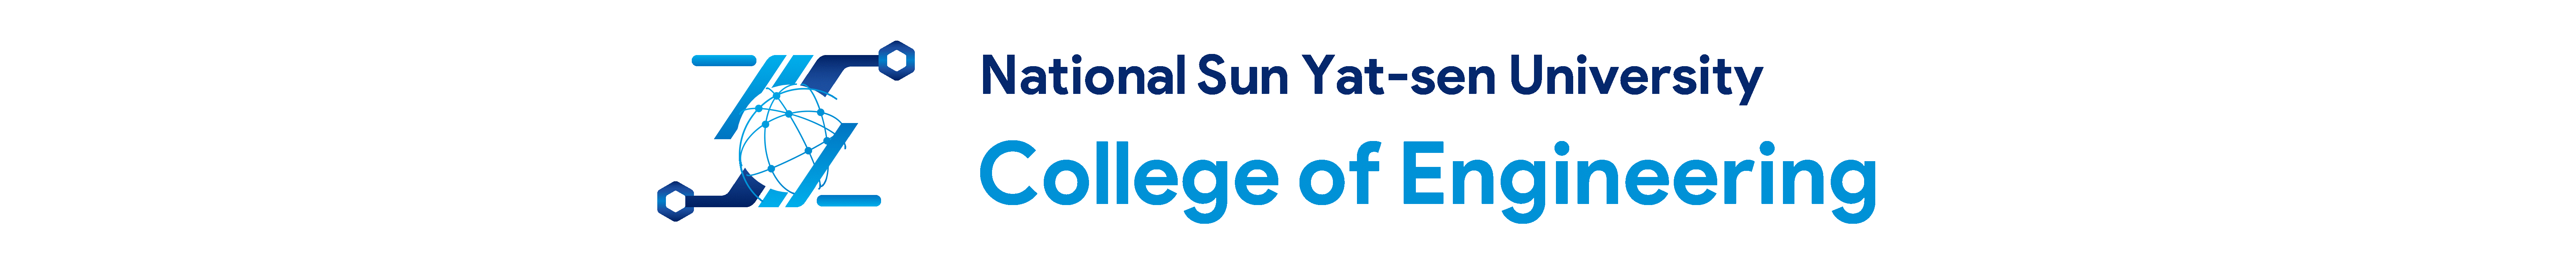 College of Engineering, National Sun Yat-sen University